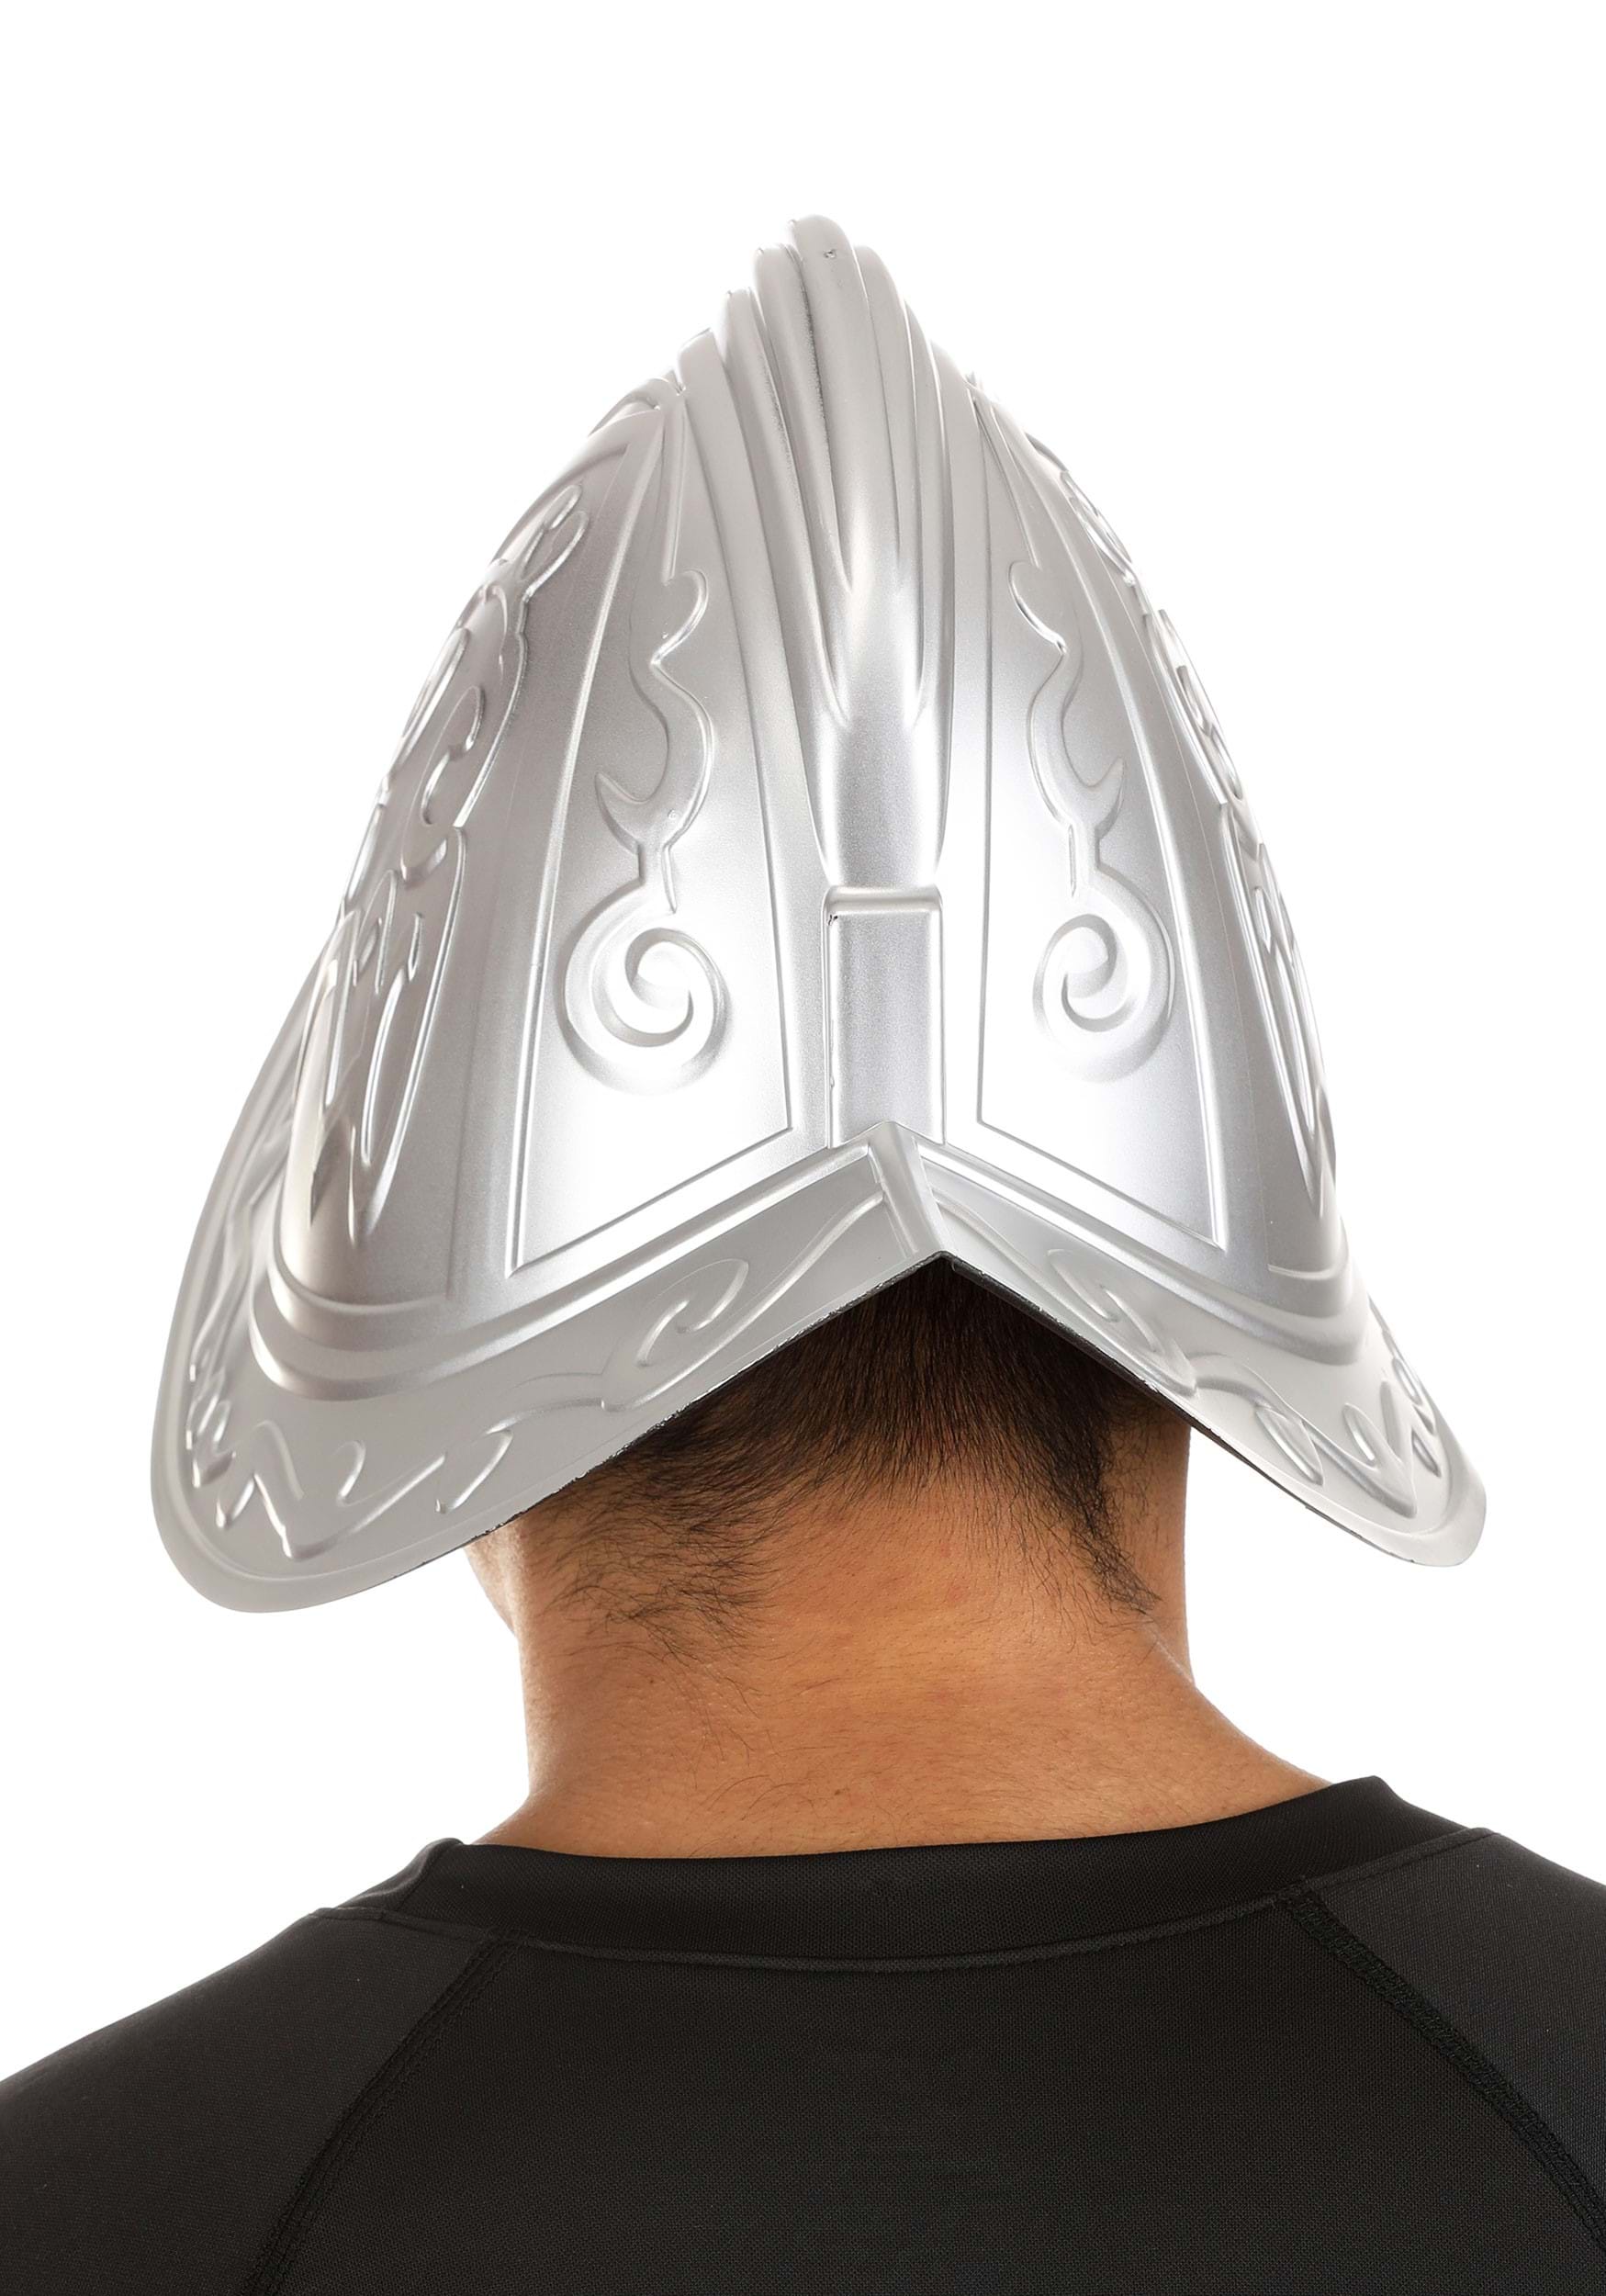 Explorer's Silver Costume Helmet